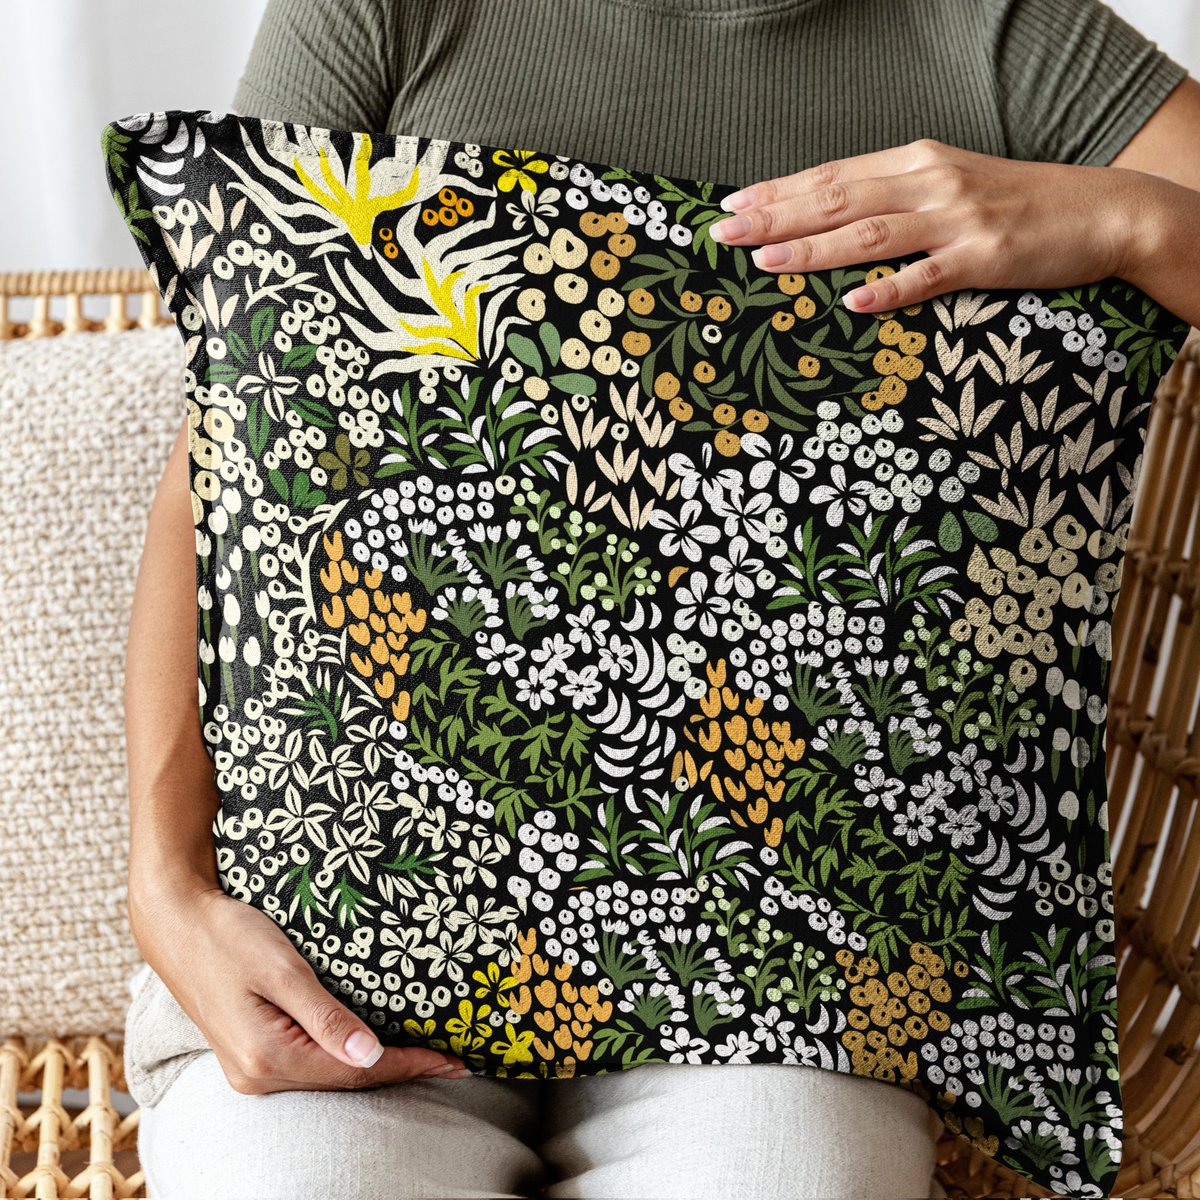 Available on Raspberry creek fabrics. Link in bio. Mockup by rawpixel
Model showcasing my floral work.

patterndesign #pattern #surfacepatterndesign #art #textiledesign #illustration #surfacedesign #design #surfacepattern #patterns #patterndesigner #fabricdesign #printandpattern